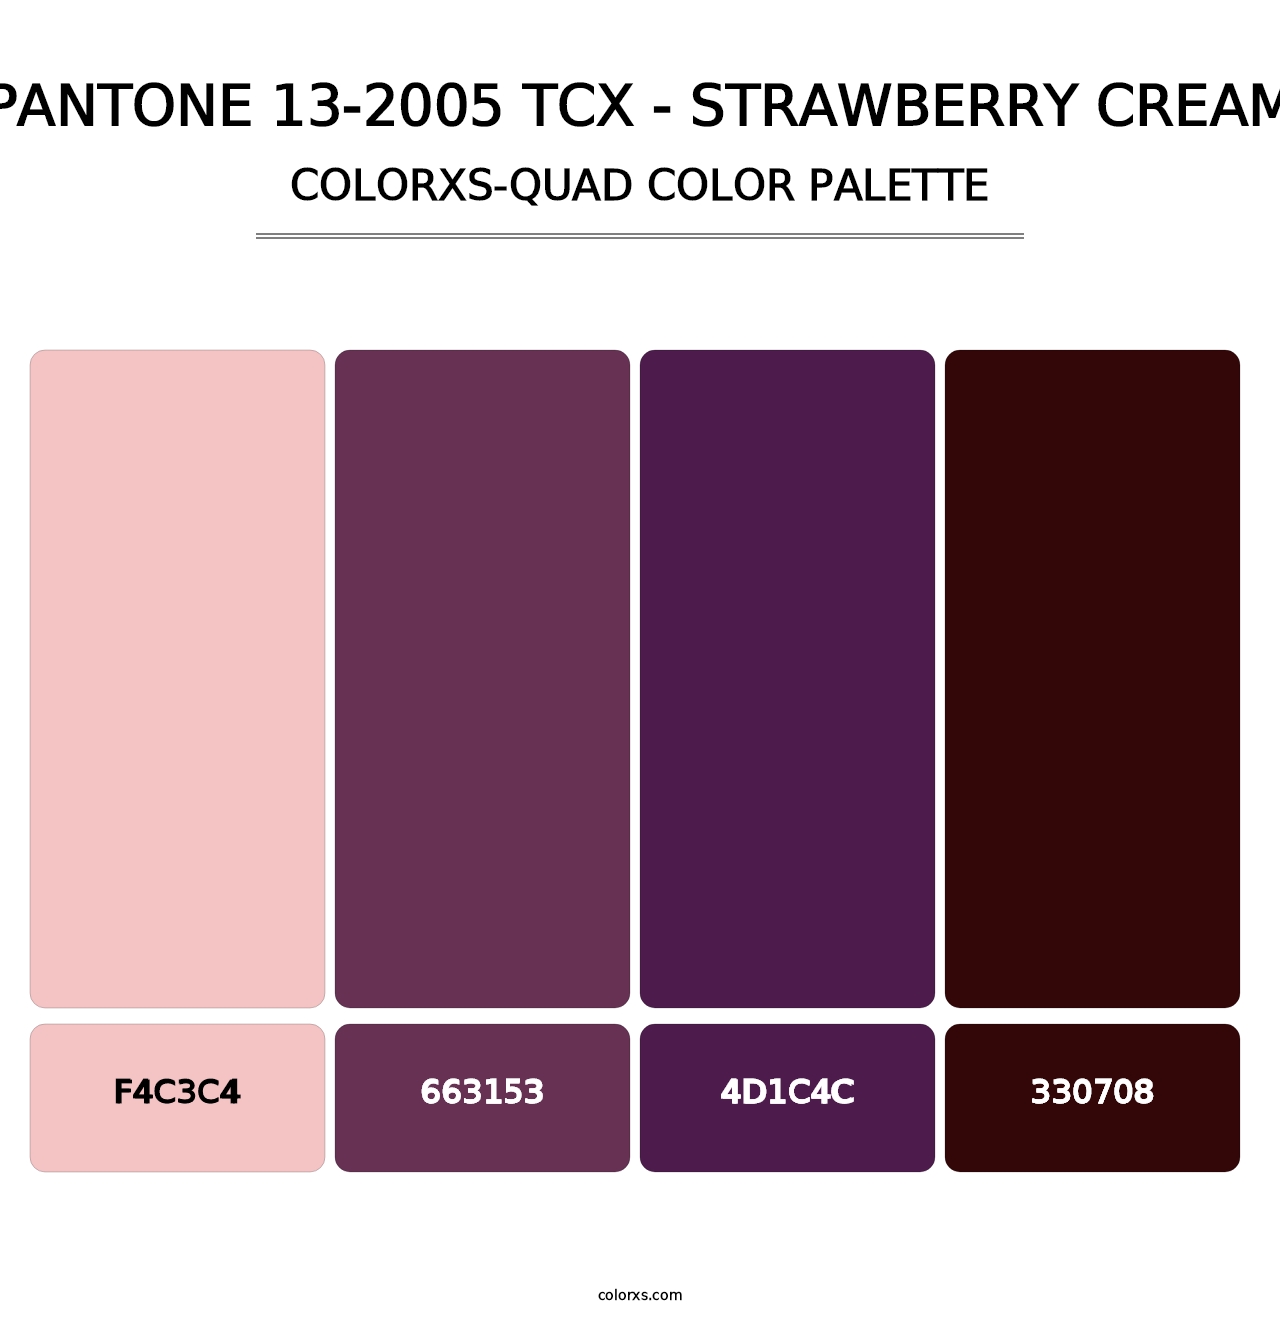 PANTONE 13-2005 TCX - Strawberry Cream - Colorxs Quad Palette